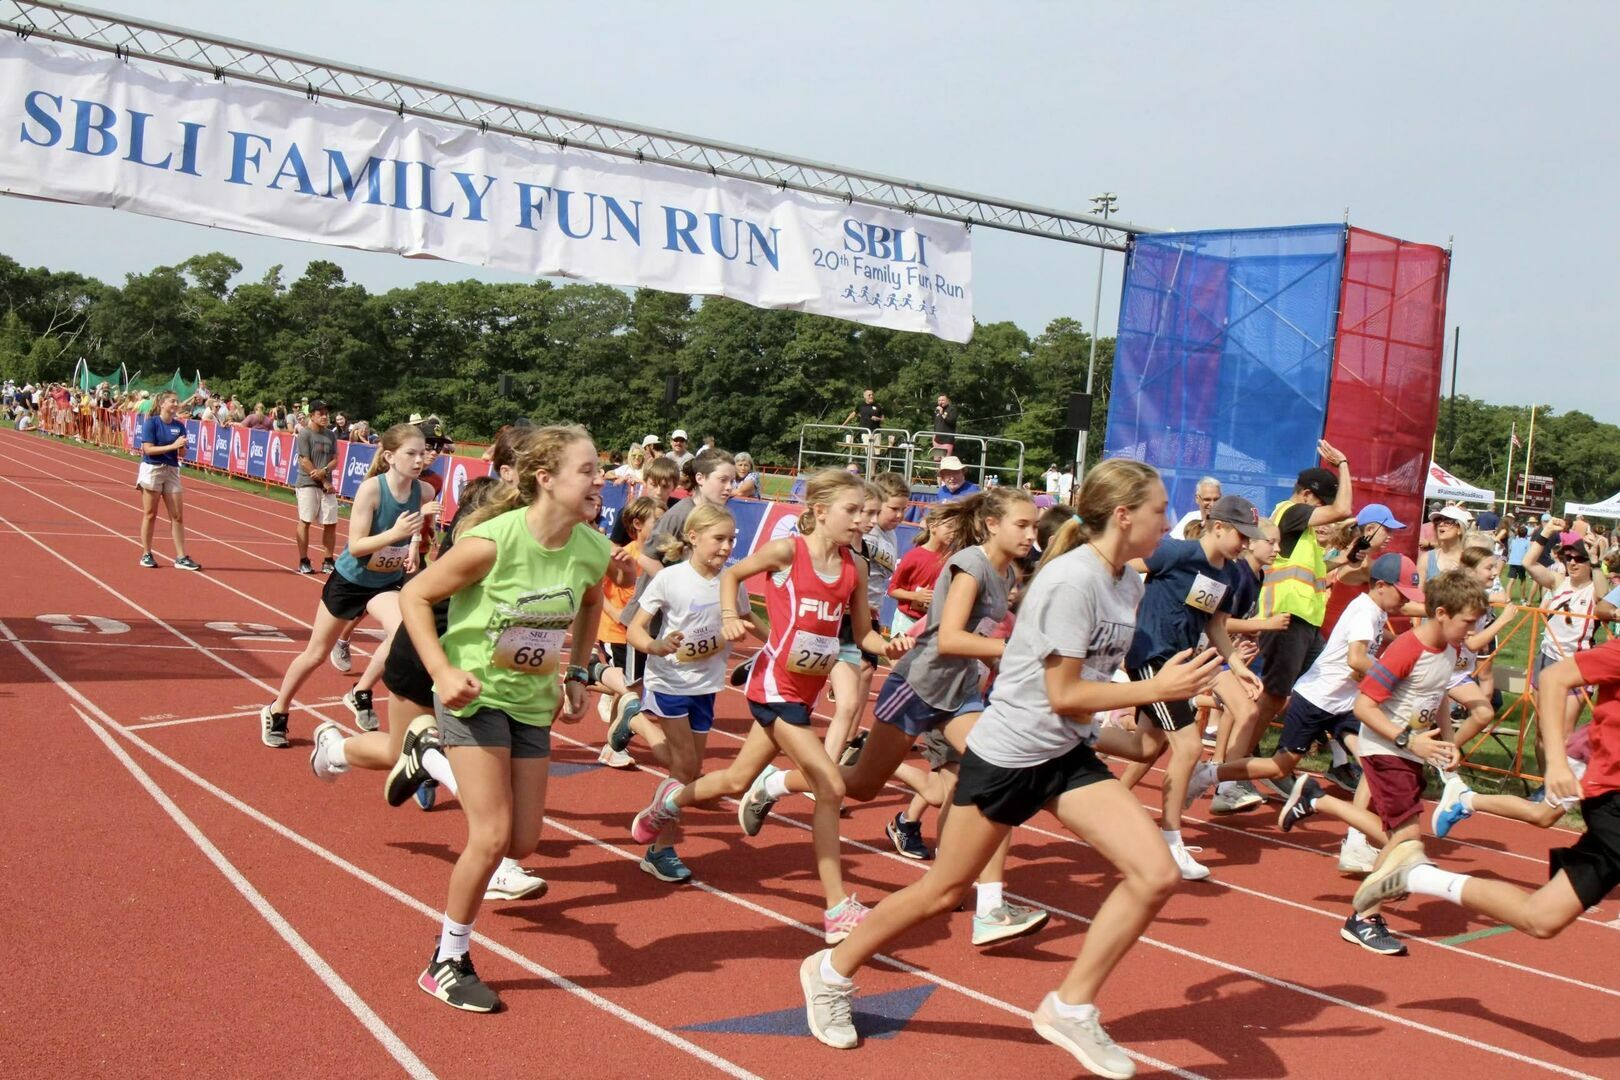 21st Annual SBLI Family Fun Run, Falmouth, Massachusetts, United States